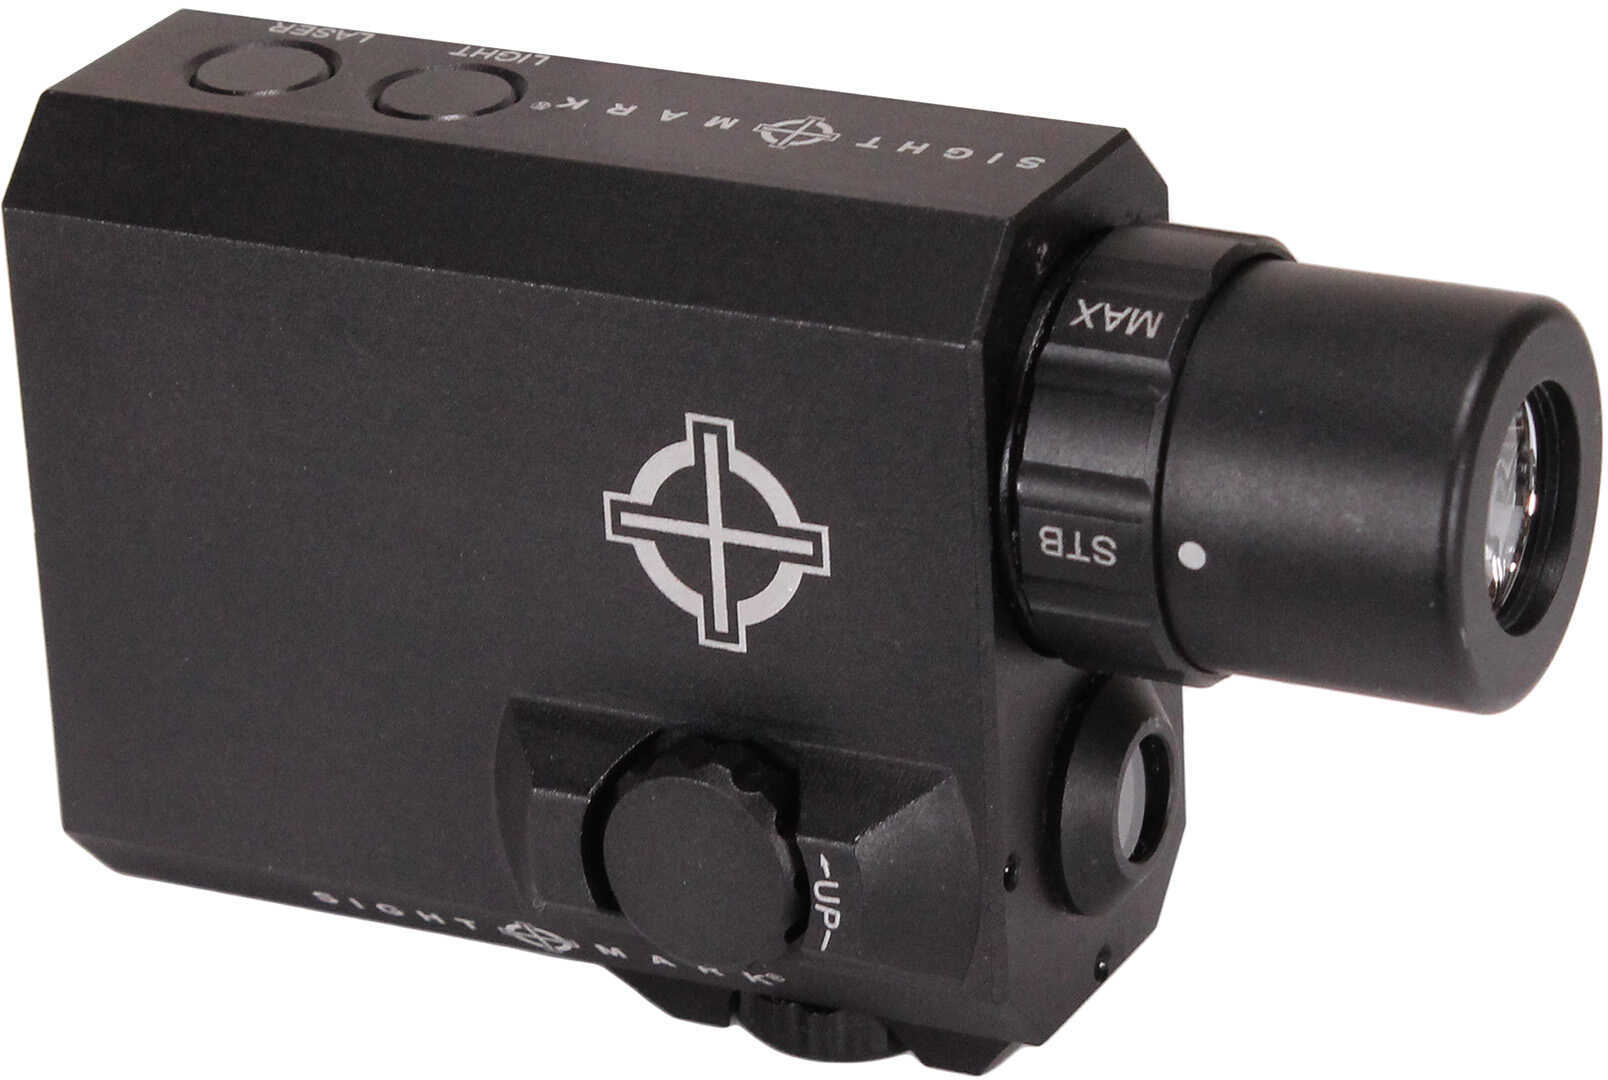 Sightmark LoPro Mini Combo, Light/Green Laser